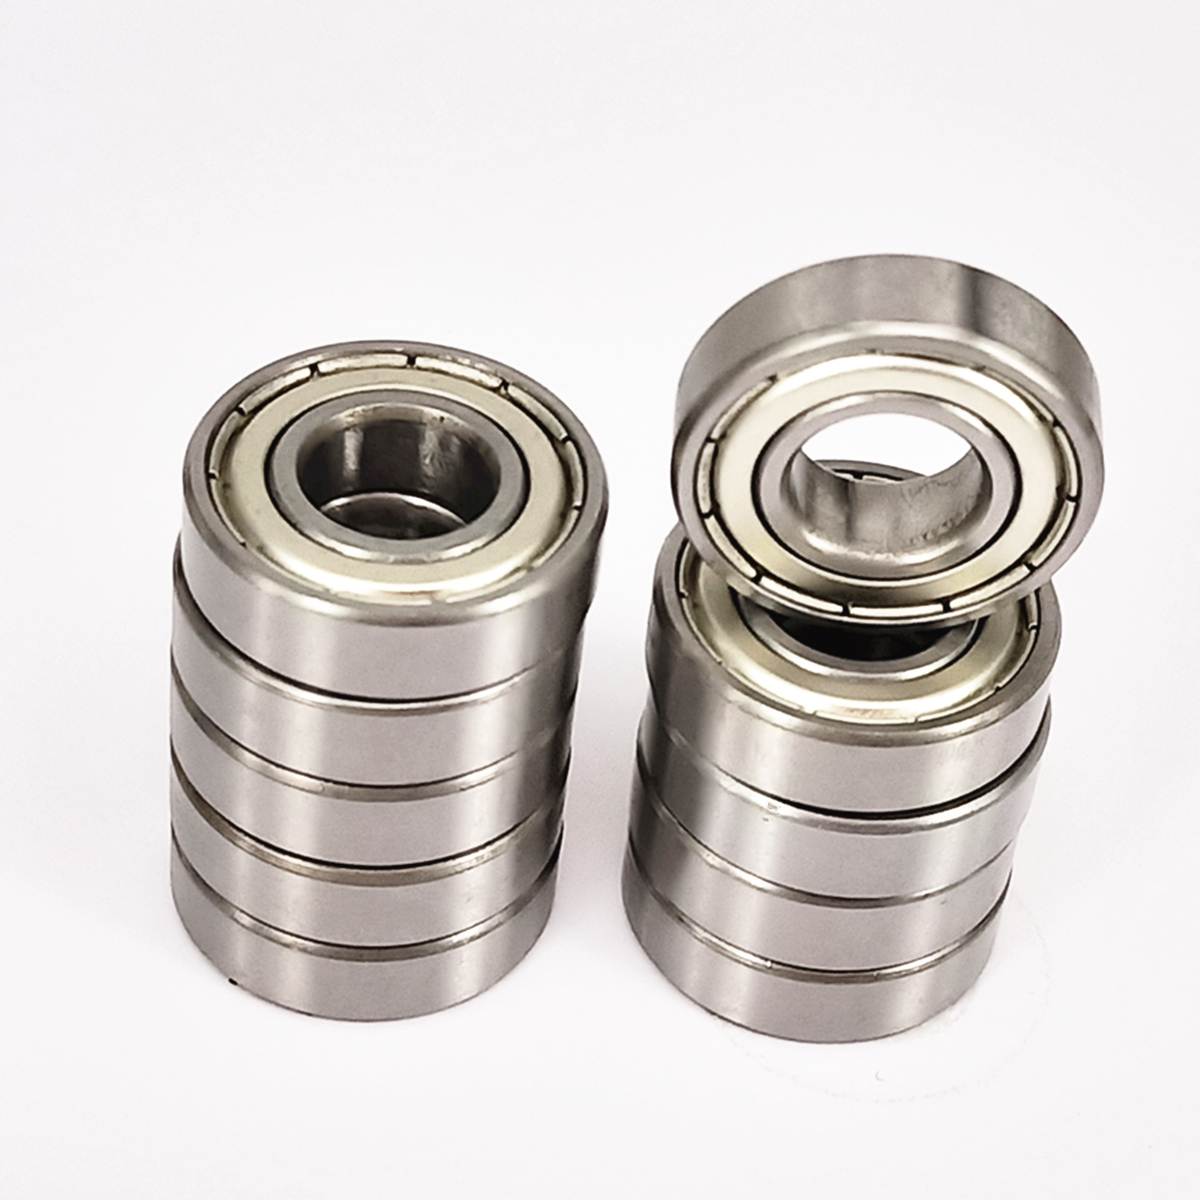 R8ZZ Ball Bearing R8-2RS bearing 1/2 x 1 1/8 x 5/16 inch bearing